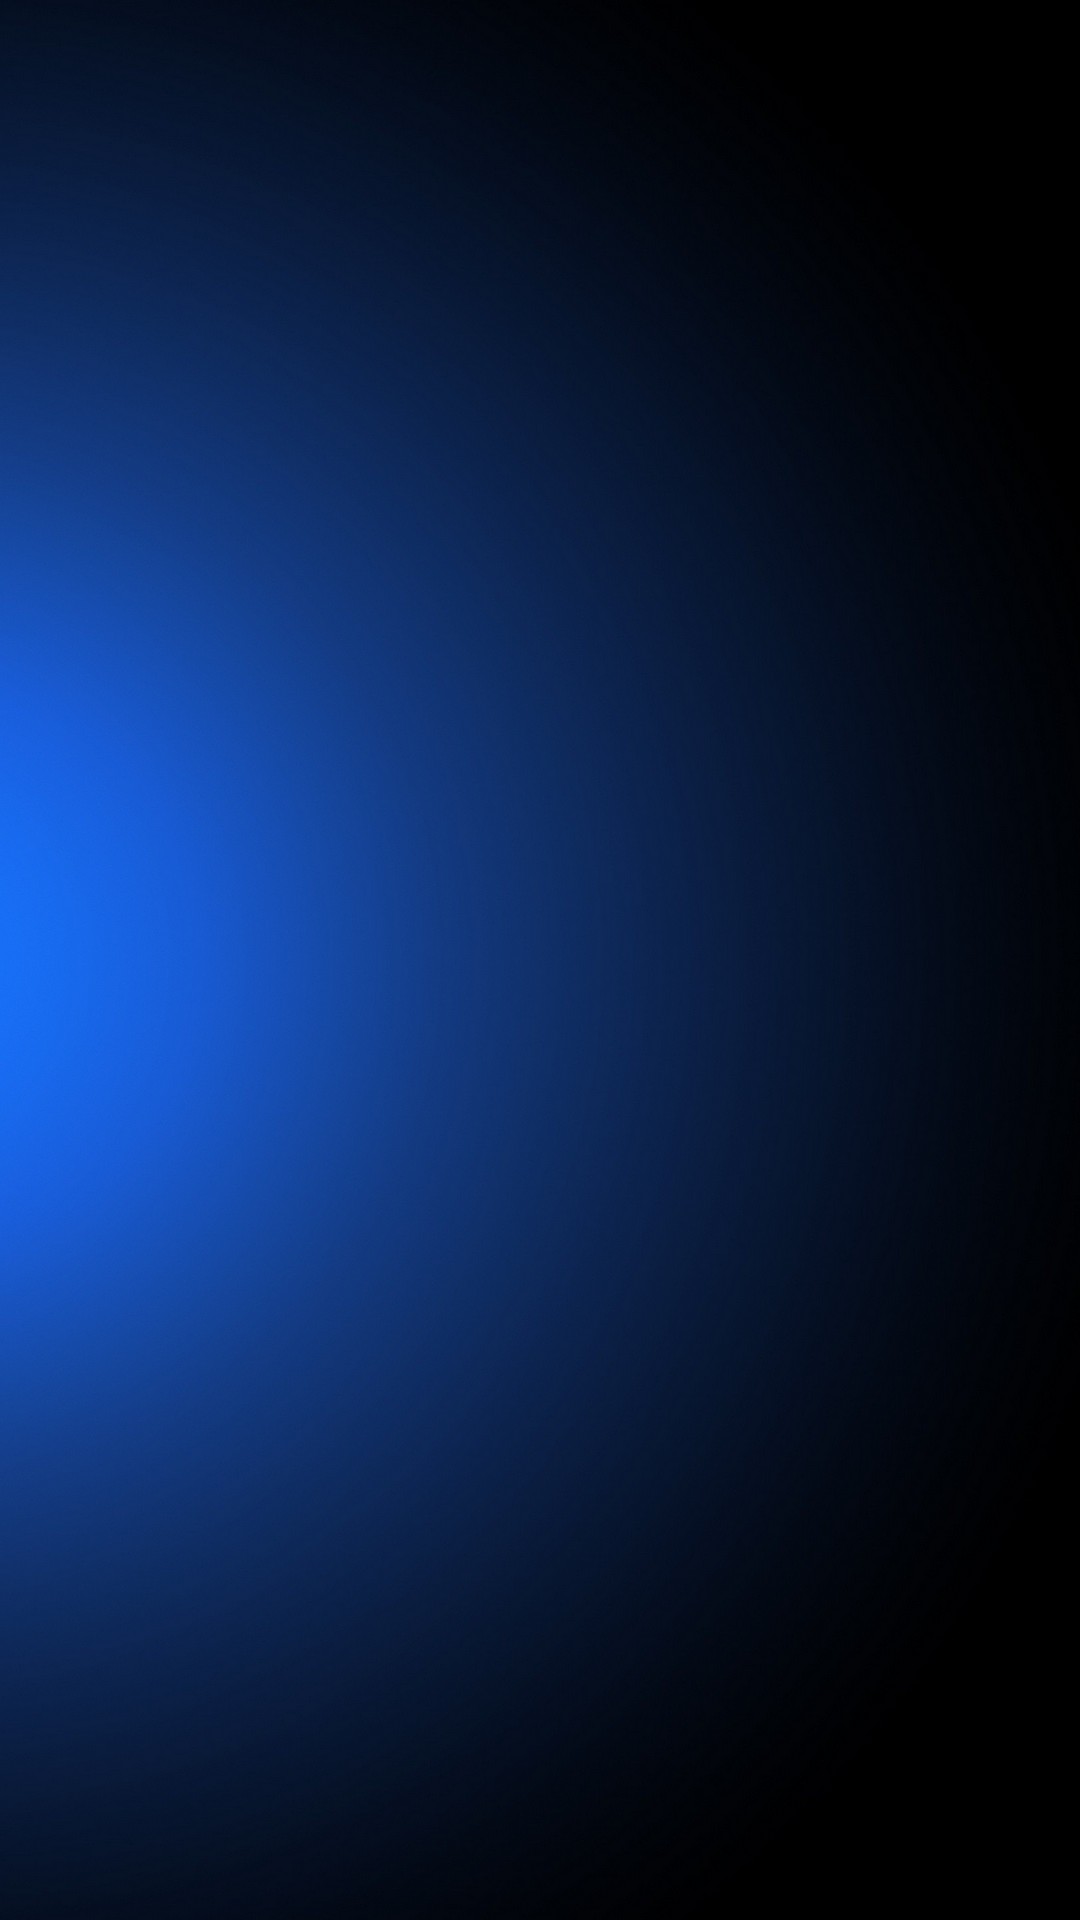 Blue Gradient Wallpaper iPhone resolution 1080x1920